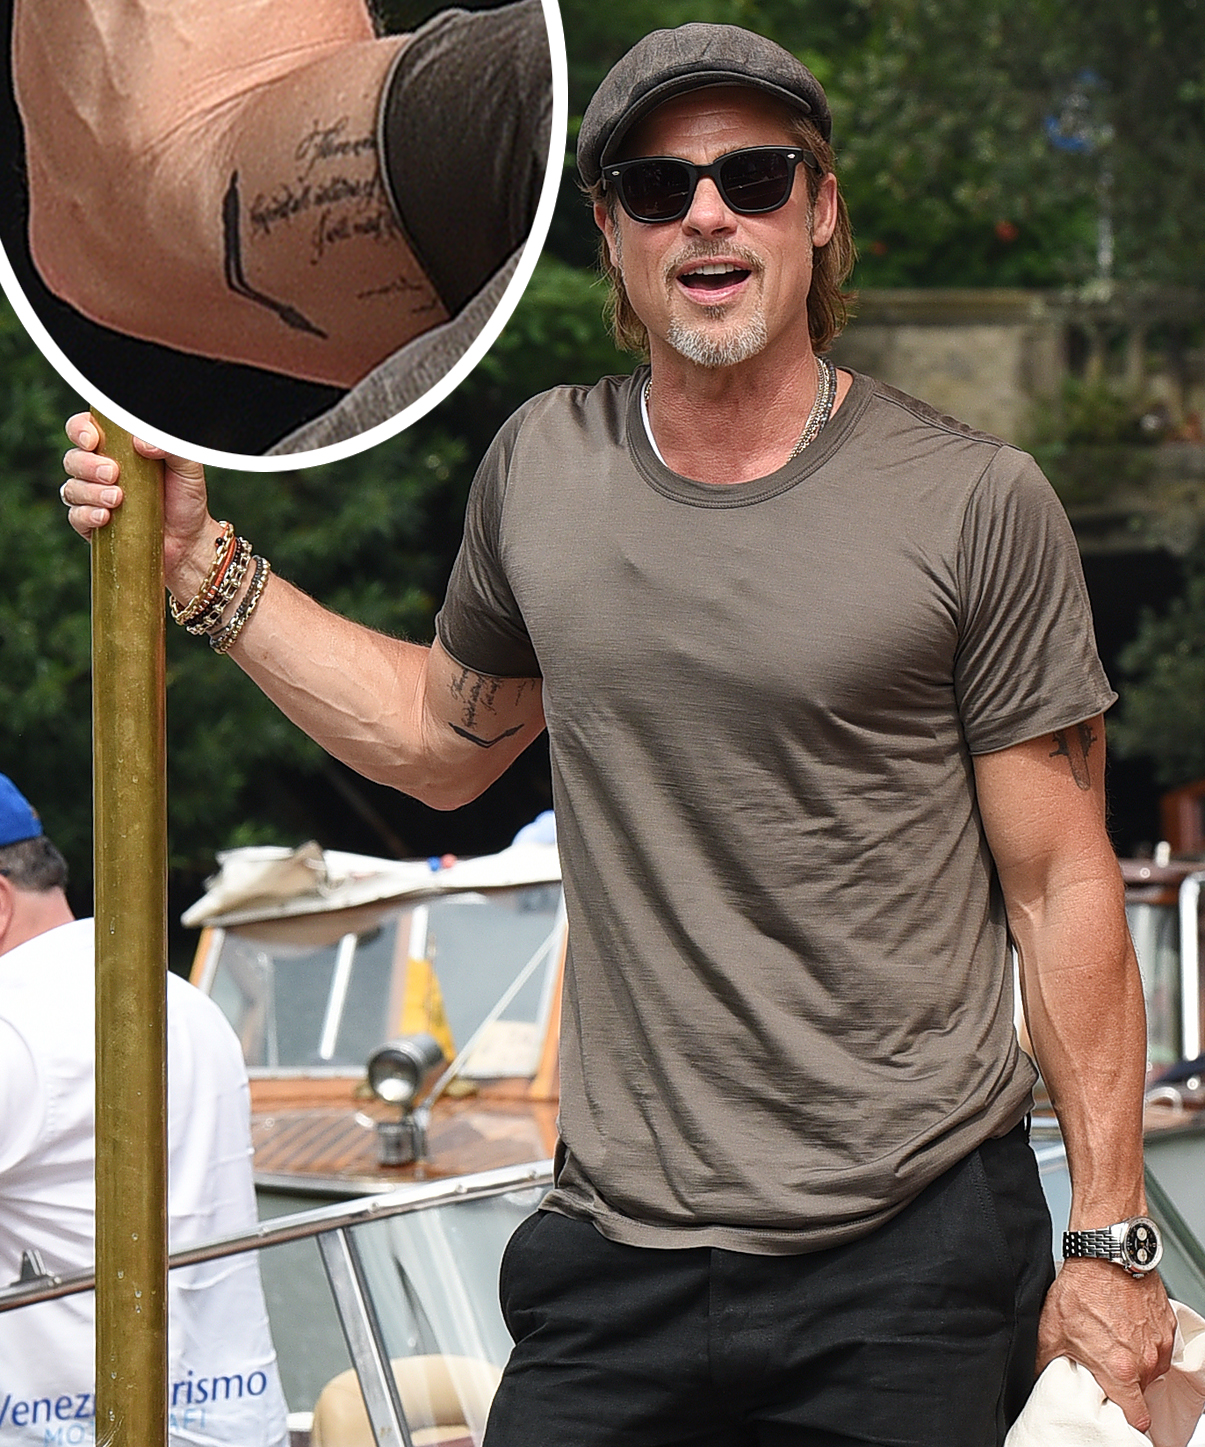 Angelina Jolie Finally Confirms Latest Tattoo Is for Brad Pitt